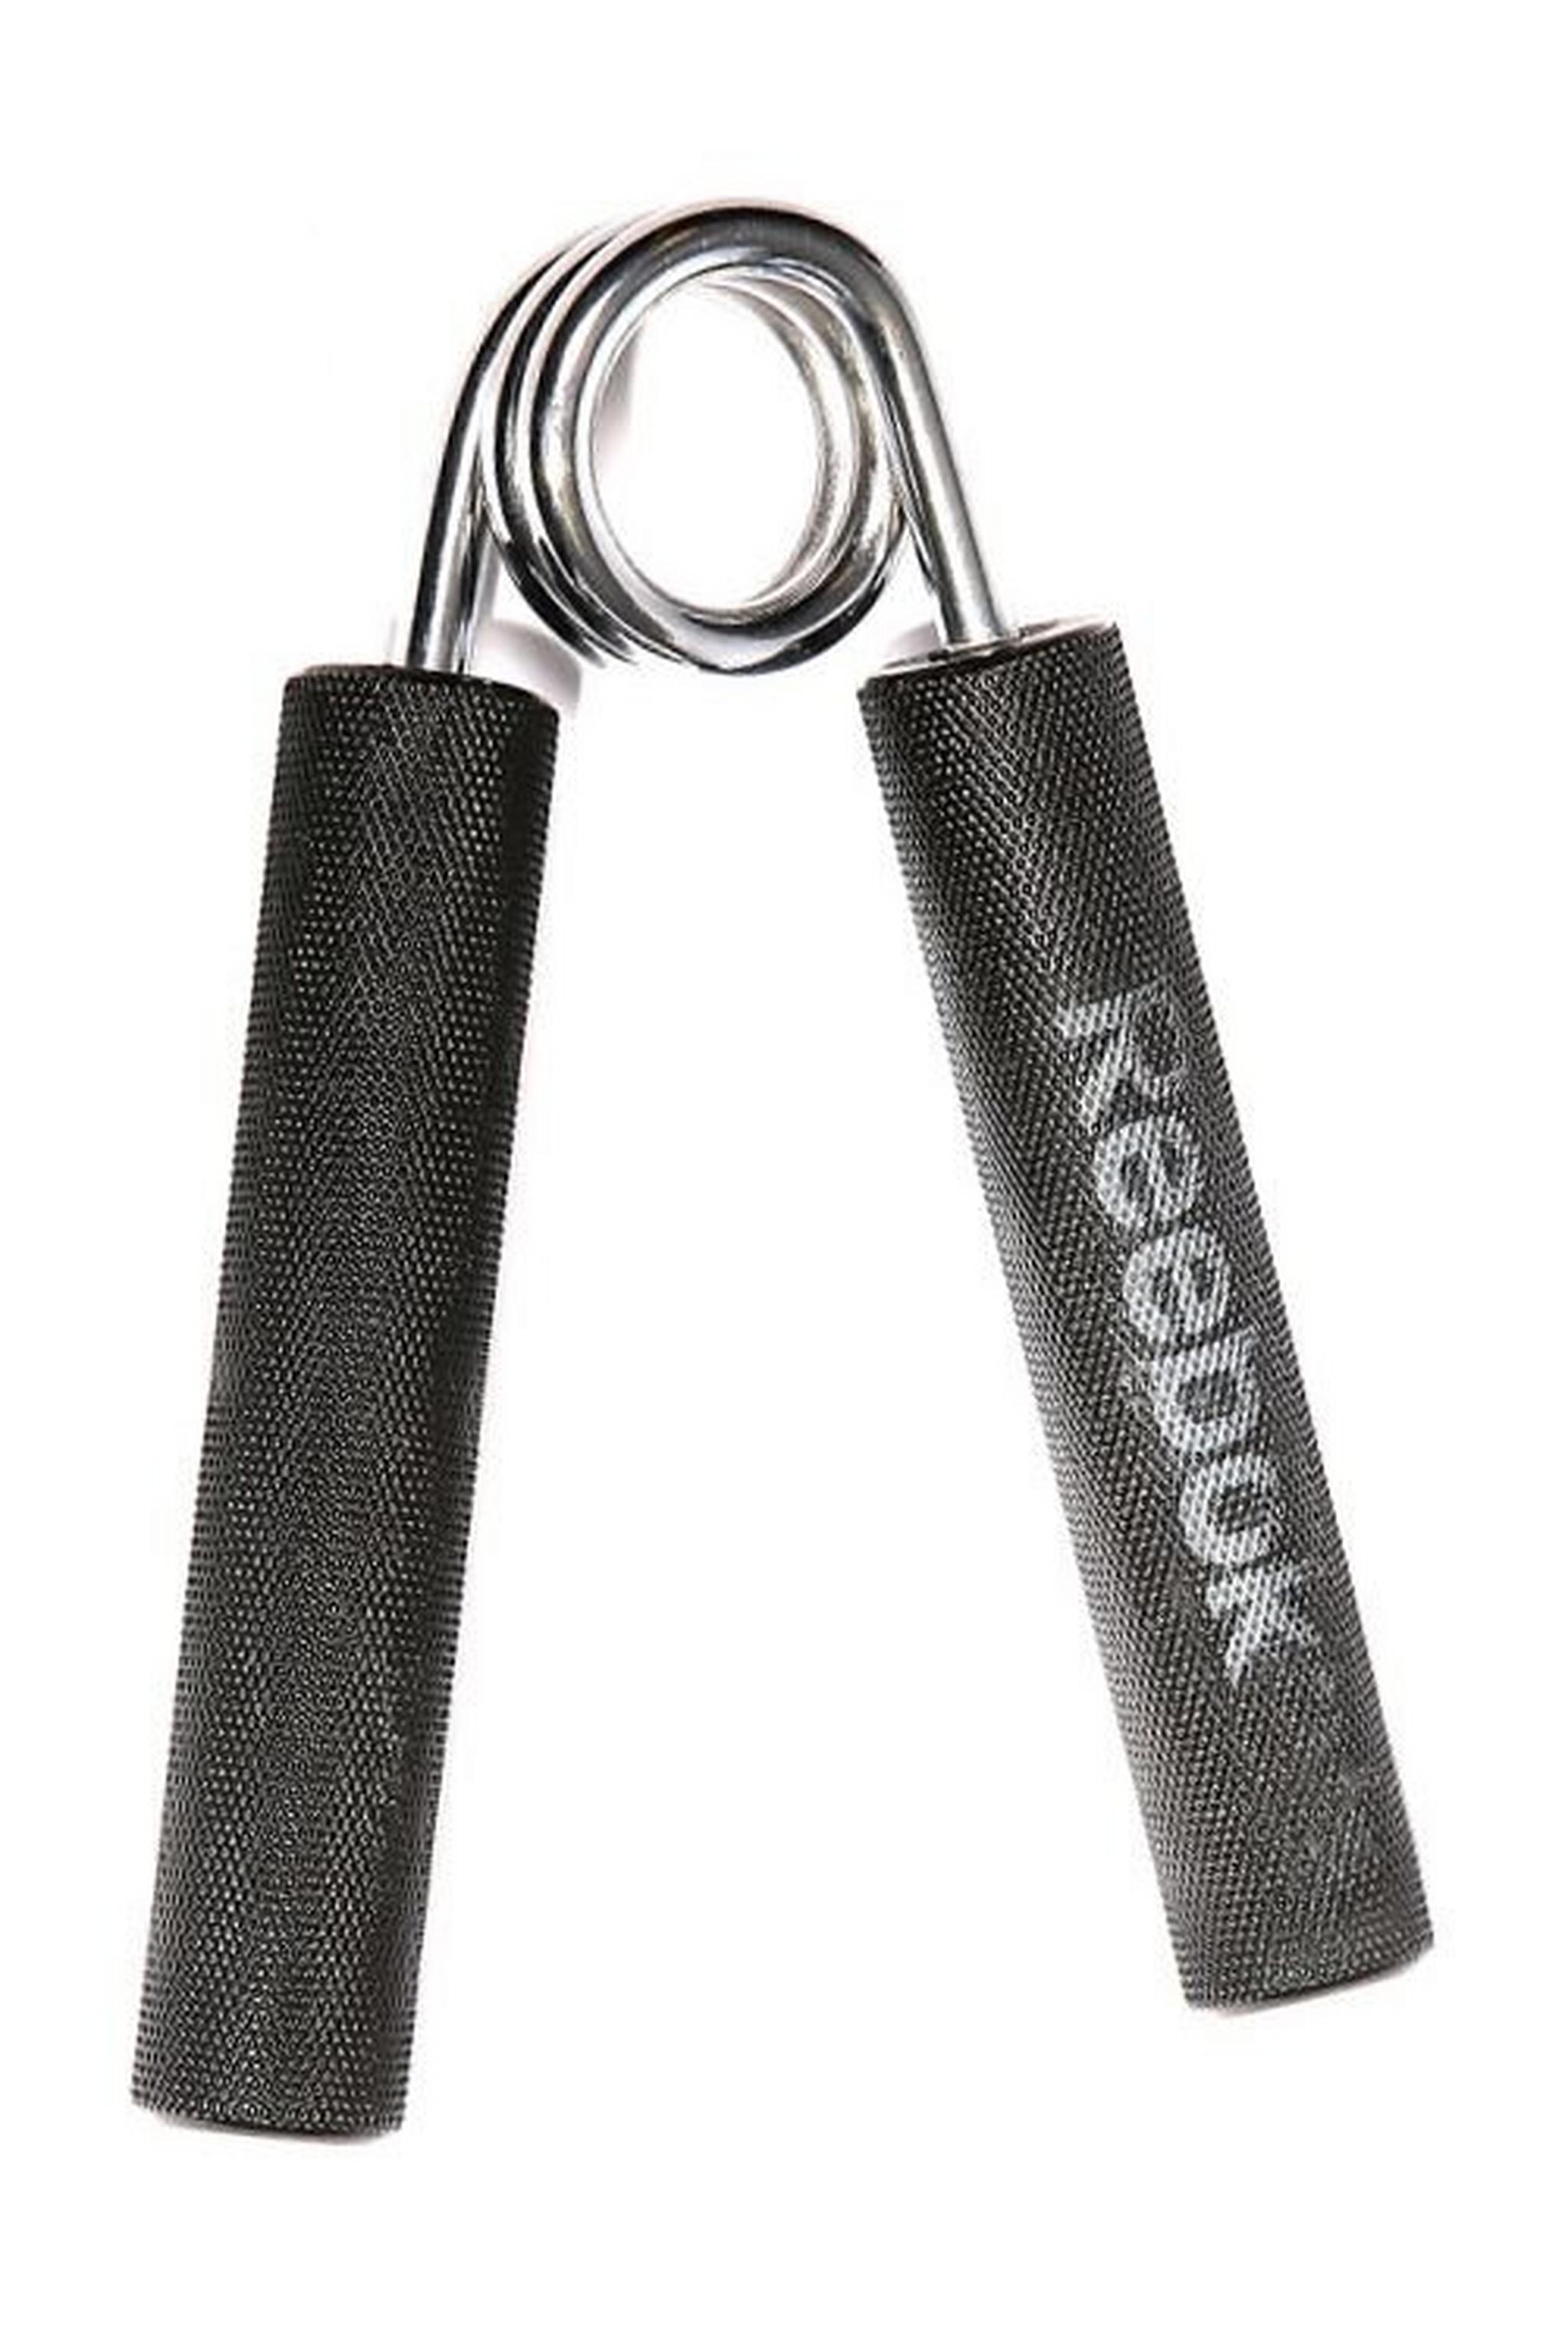 Reebook Hand Grip Trainer (RAWT-11035) - Black